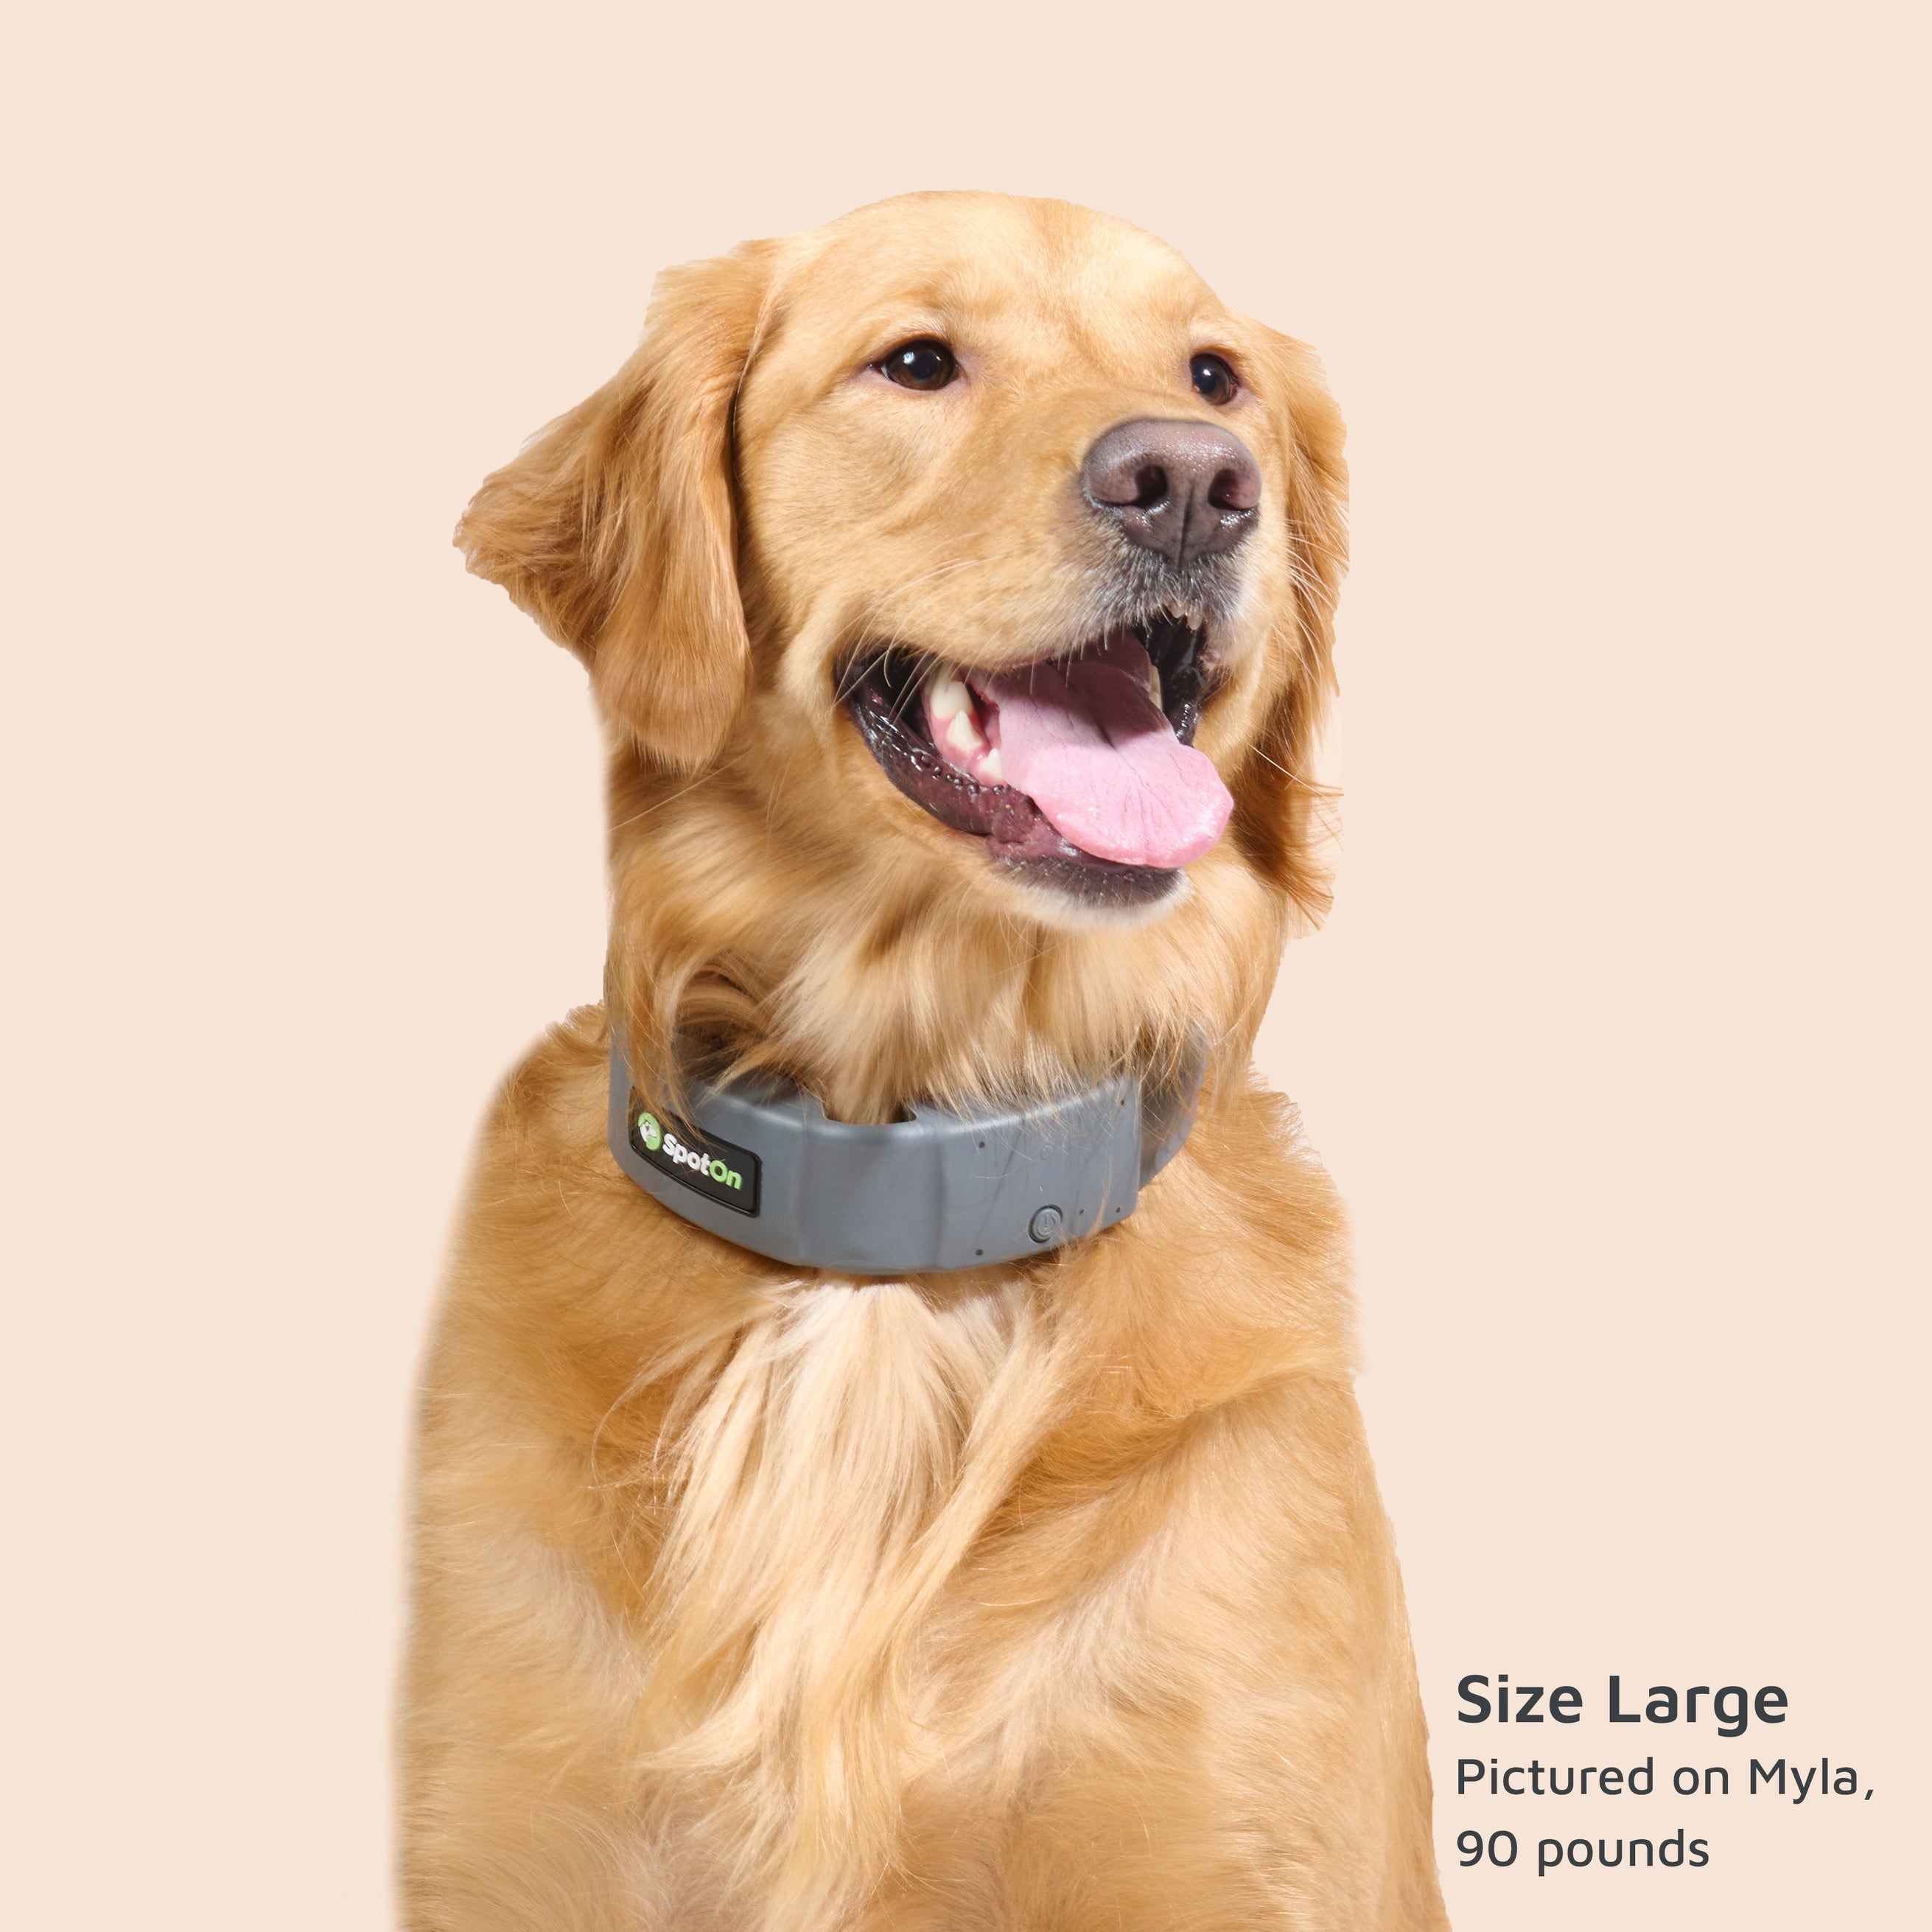 wireless dog collar worn by Myla, 90 pound golden retriever